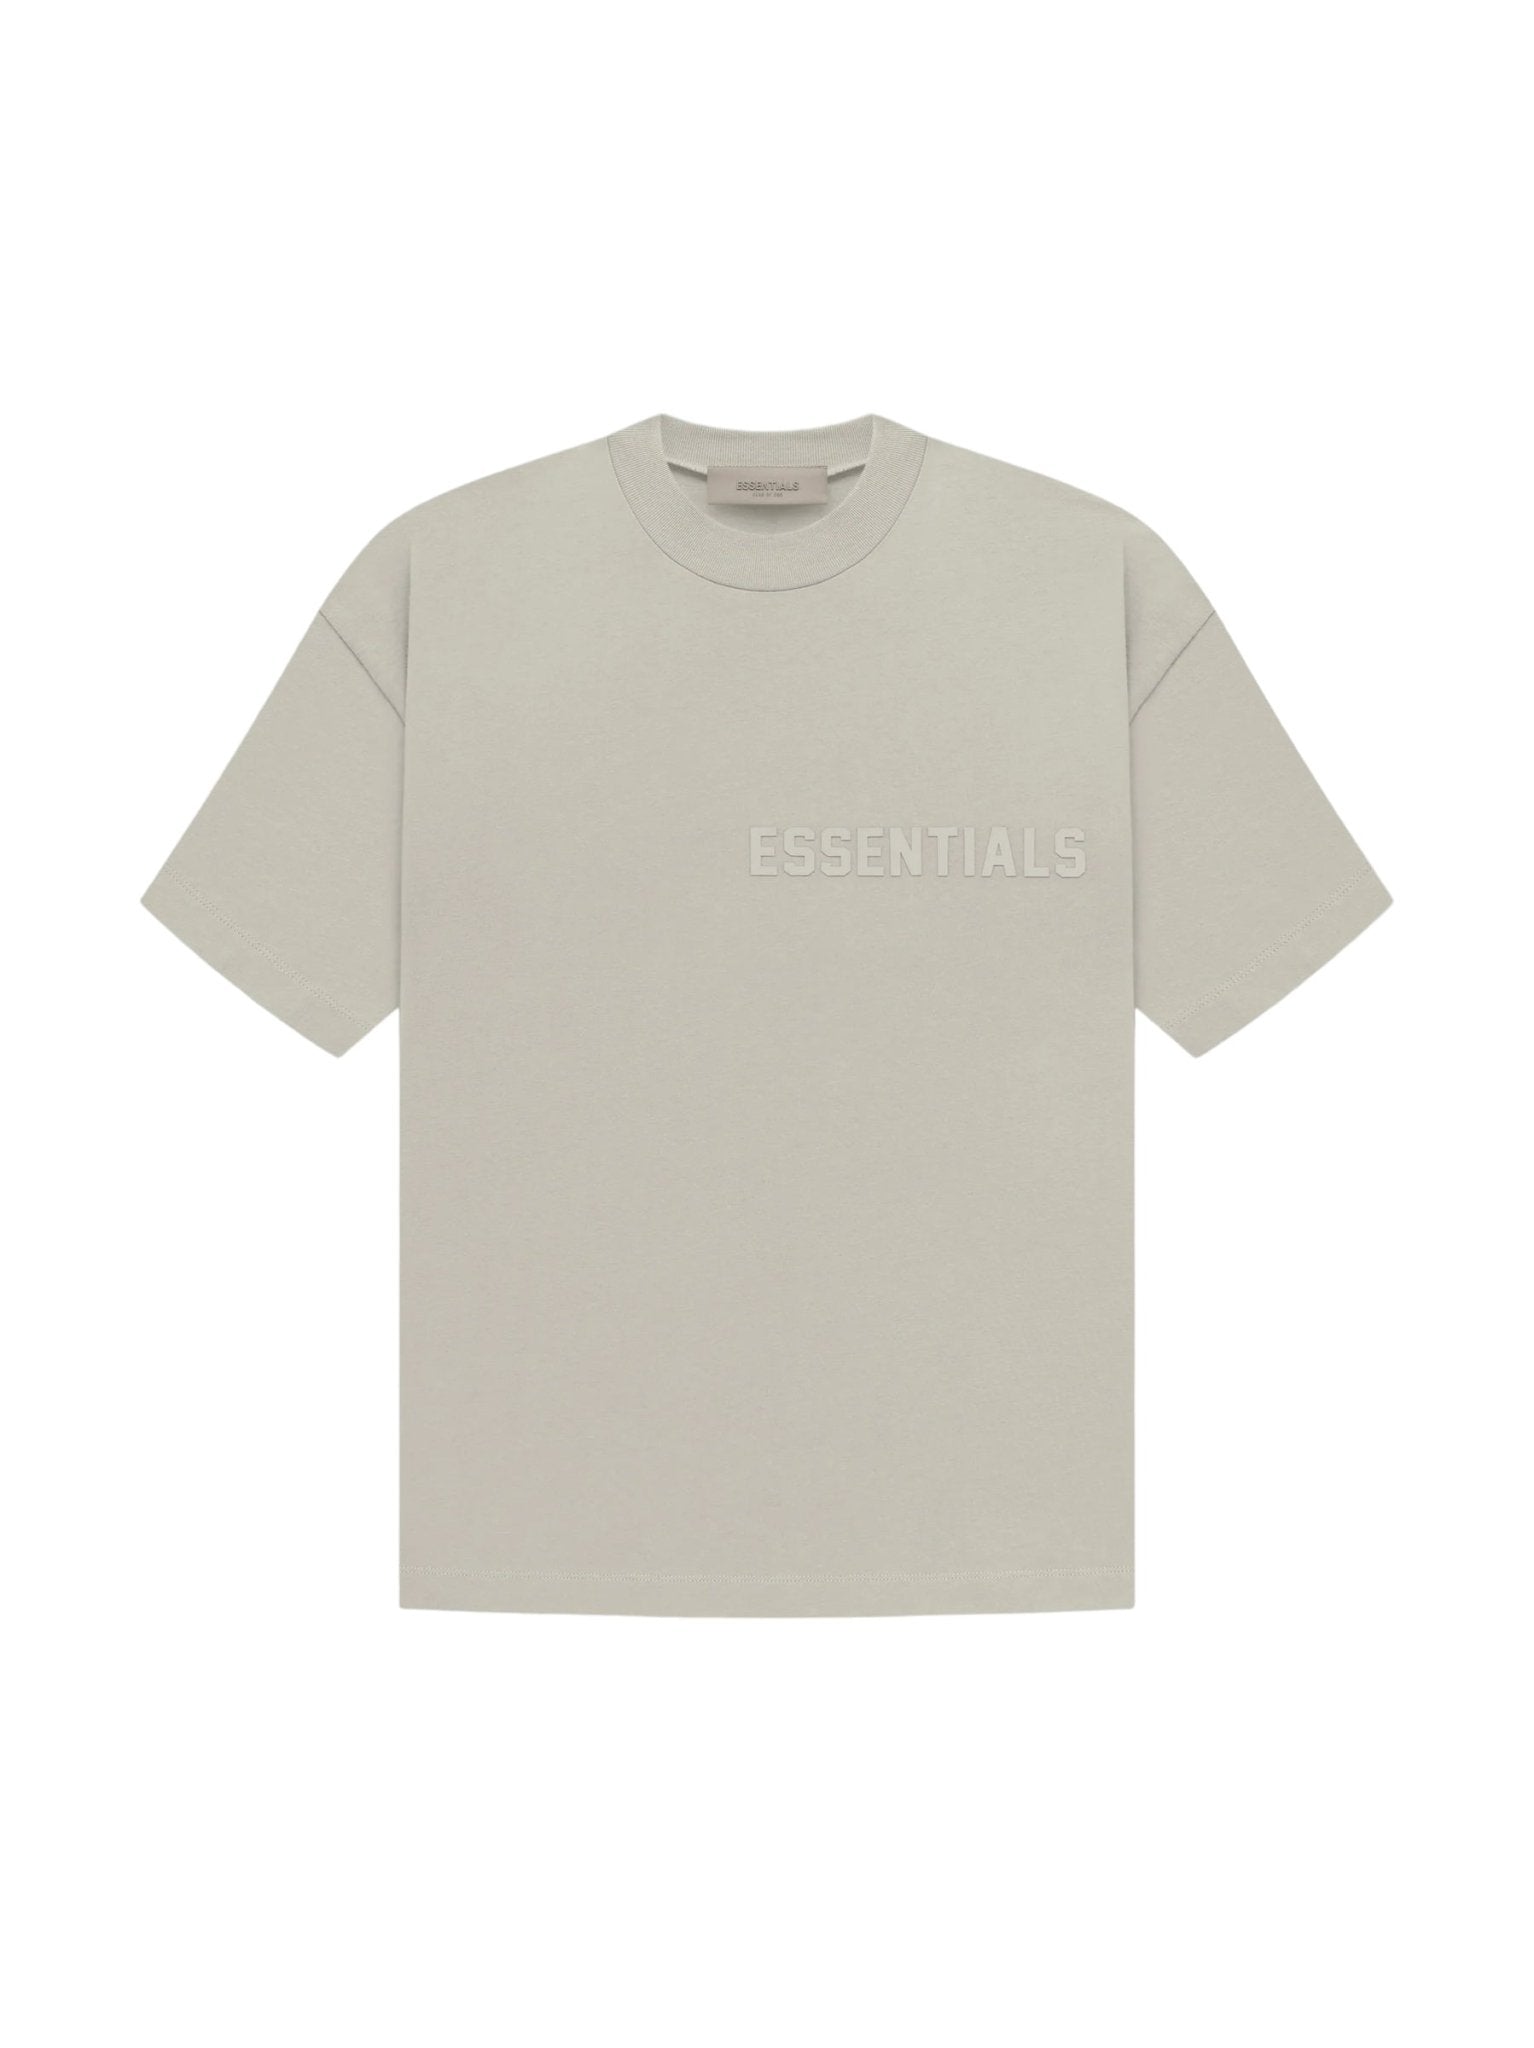 Fear of God Essentials T-shirt Seal - Sneakersbe Sneakers Sale Online